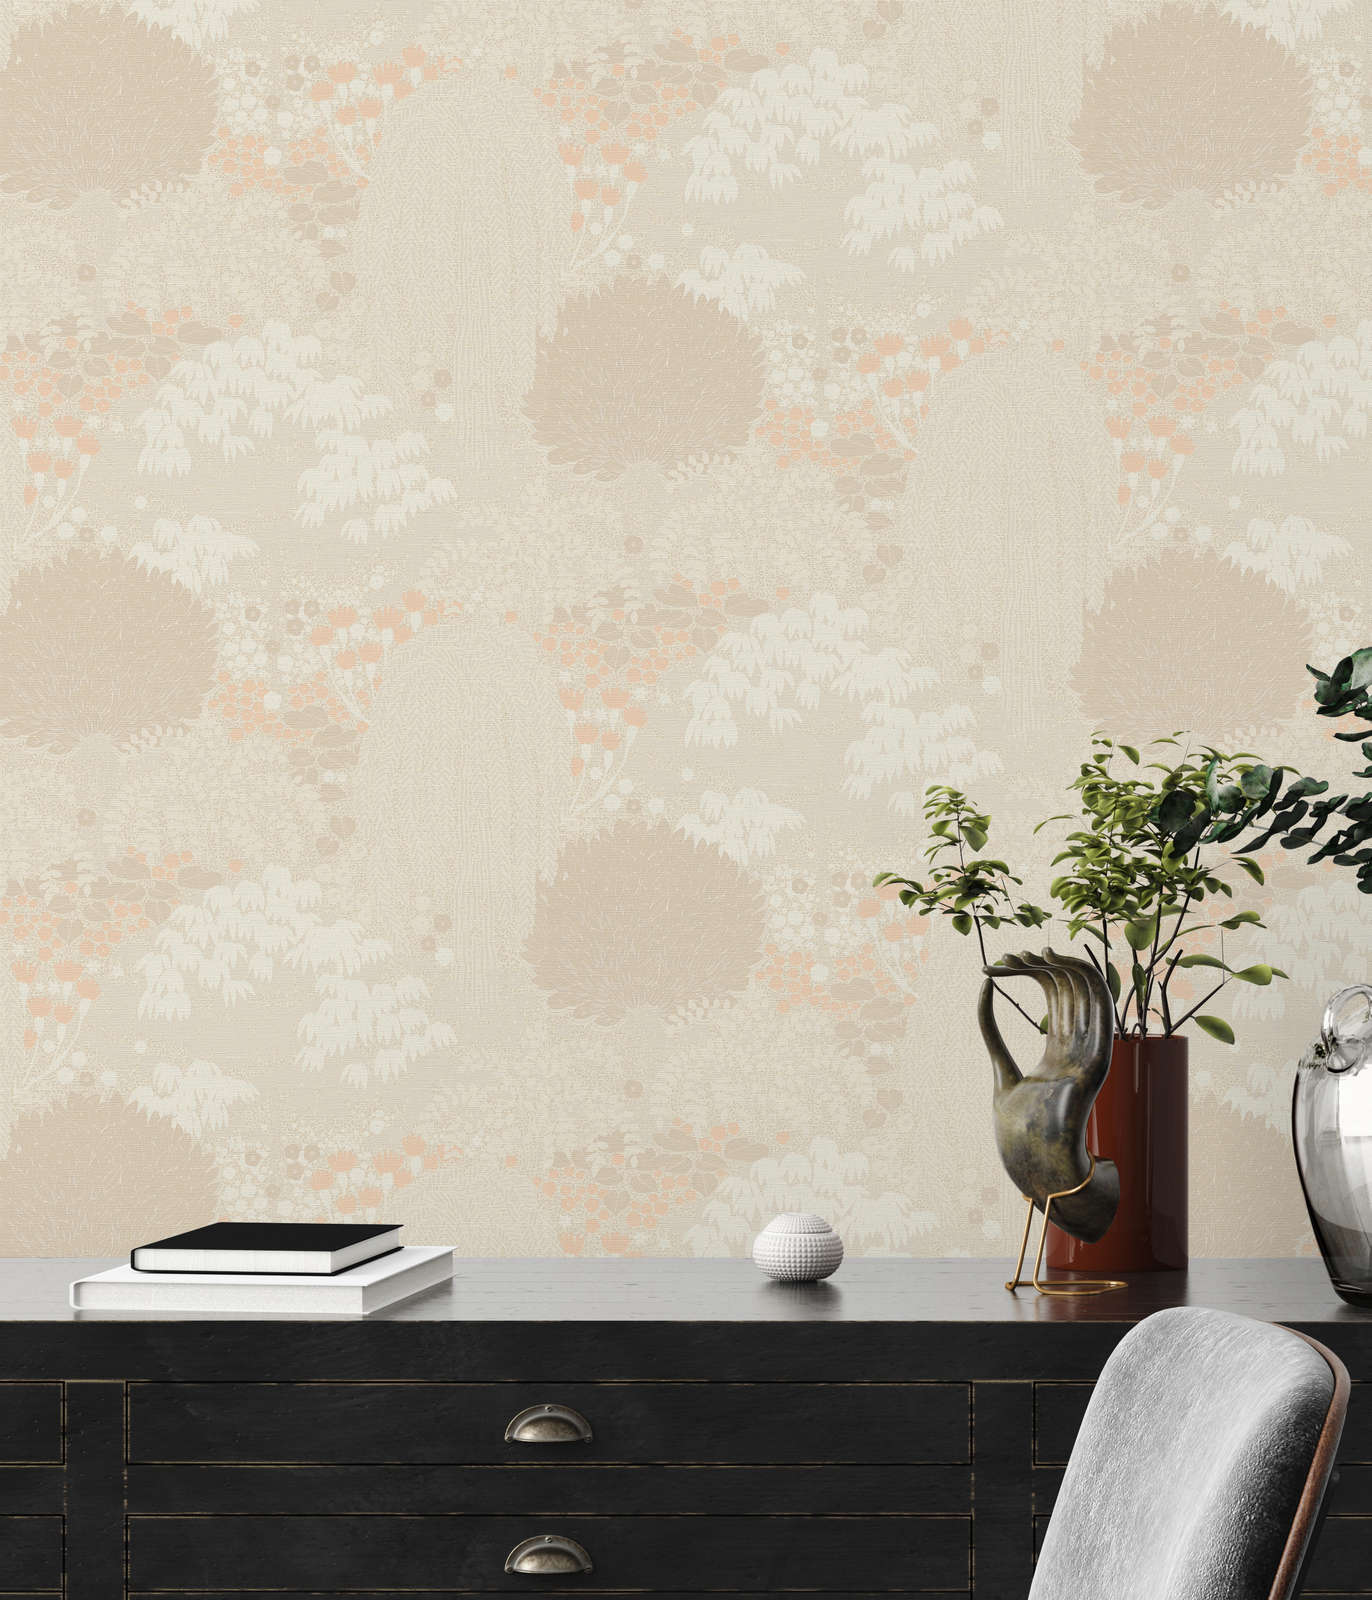             wallpaper floral with leaves light textured, matt - beige, cream, pink
        